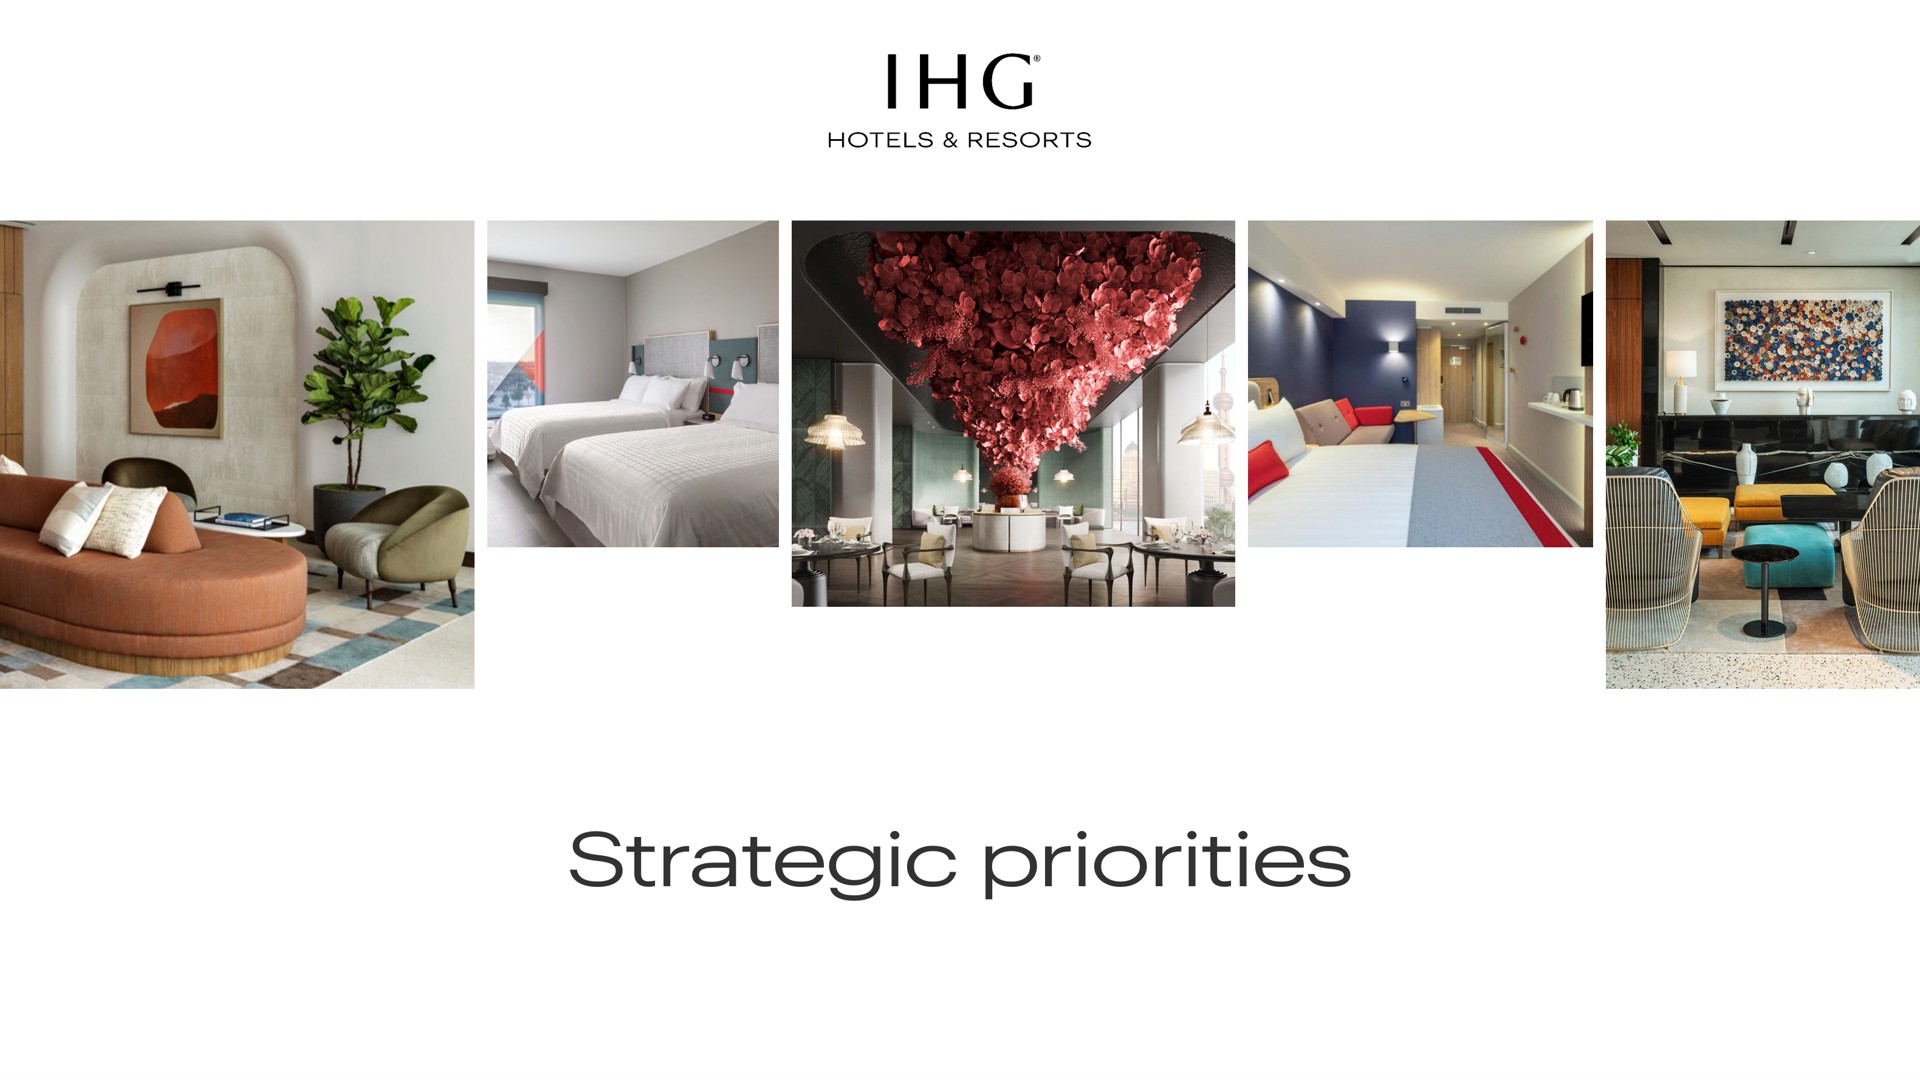 strategic priorities | IHG Hotels